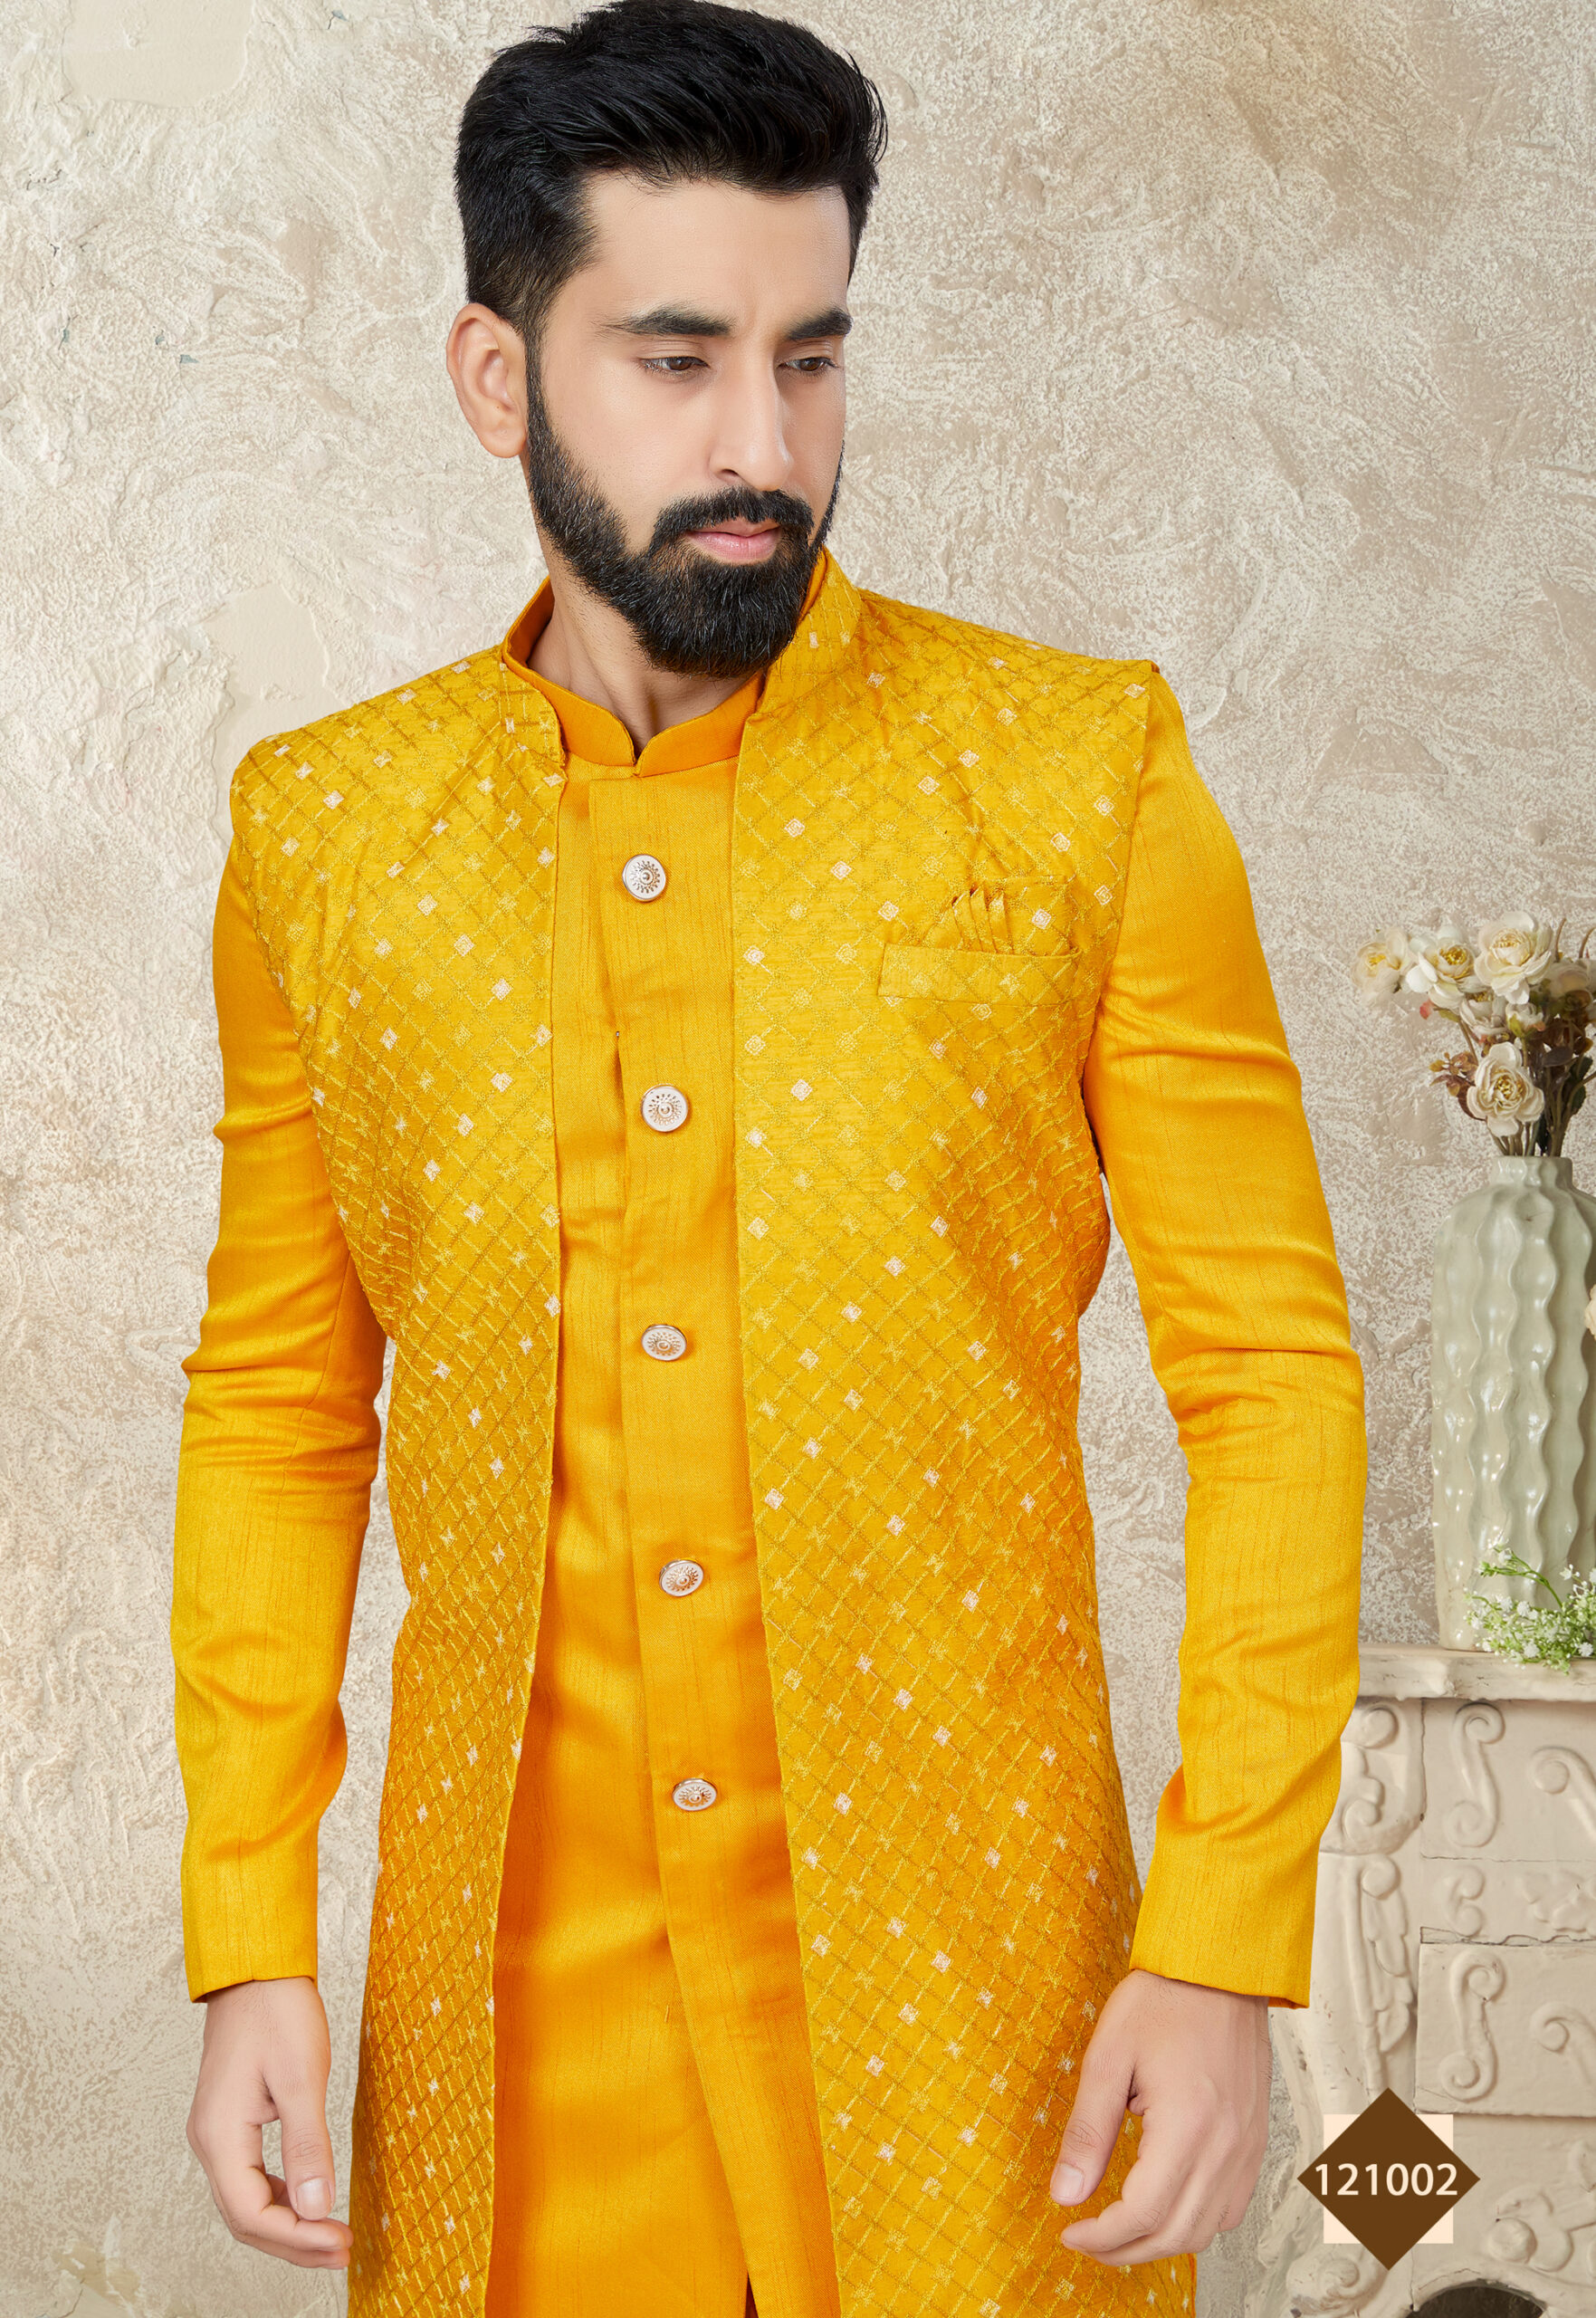 Designerdarji Indian Ethnic Designer Mens Wedding Wear Dress Indowestern Party  Wear Suits Plus Size Available - Etsy | Indian wedding suits men, Wedding  kurta for men, Designer clothes for men